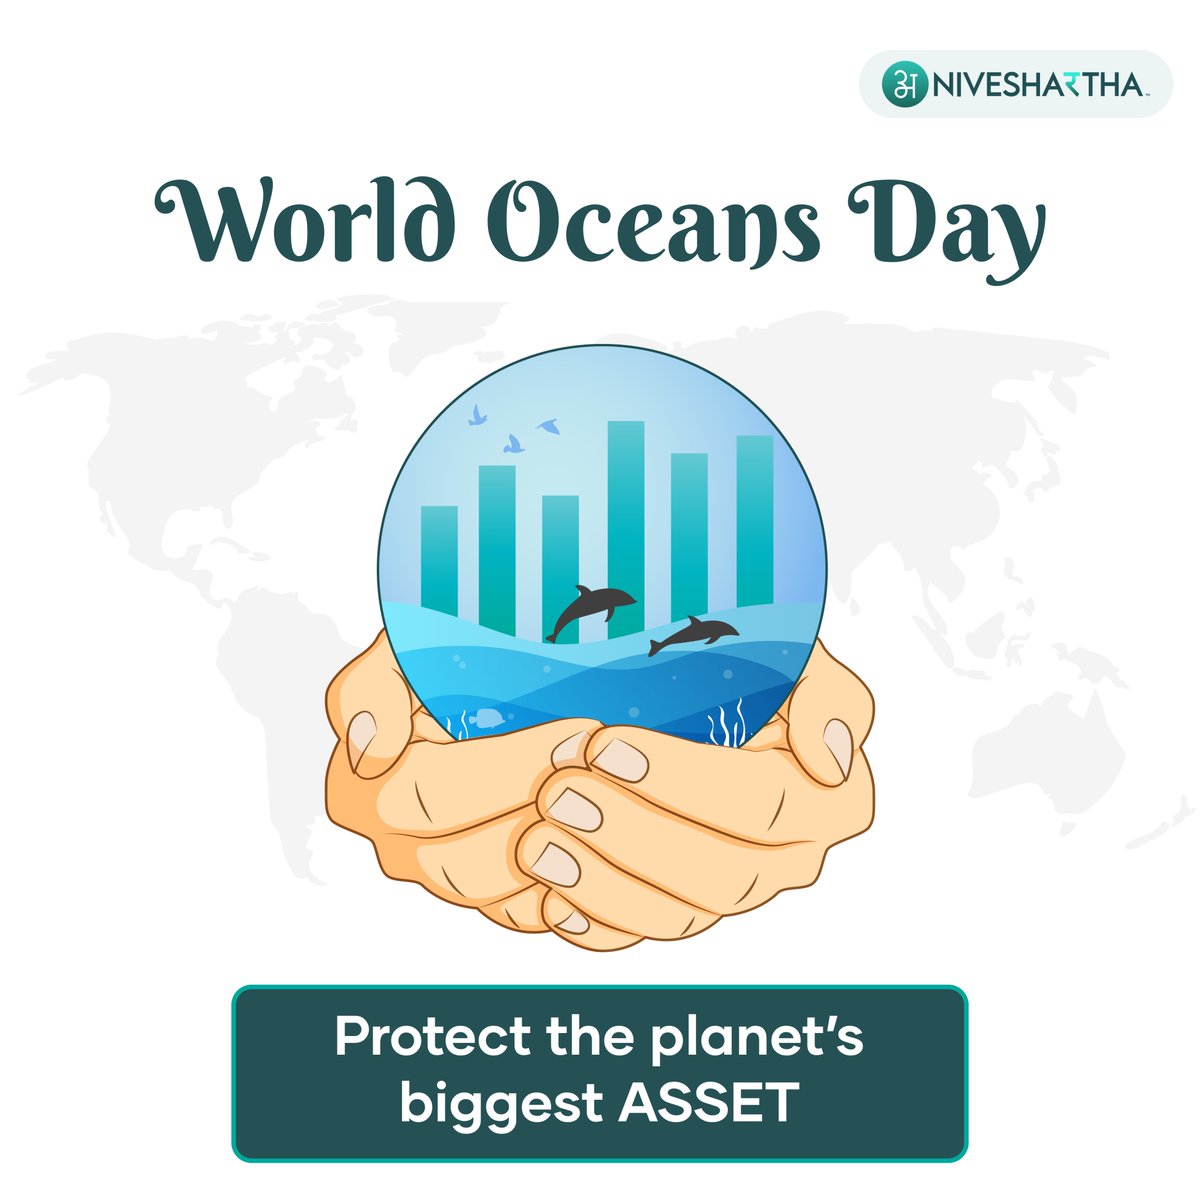 Happy #WorldOceanDay! 

Visit us on - niveshartha.com

#niveshartha #celebration #investinoceans #sustainable #savewater #investingforthefuture #worldwide #stockmarket #researchanalyst #investment #nse #bseindia